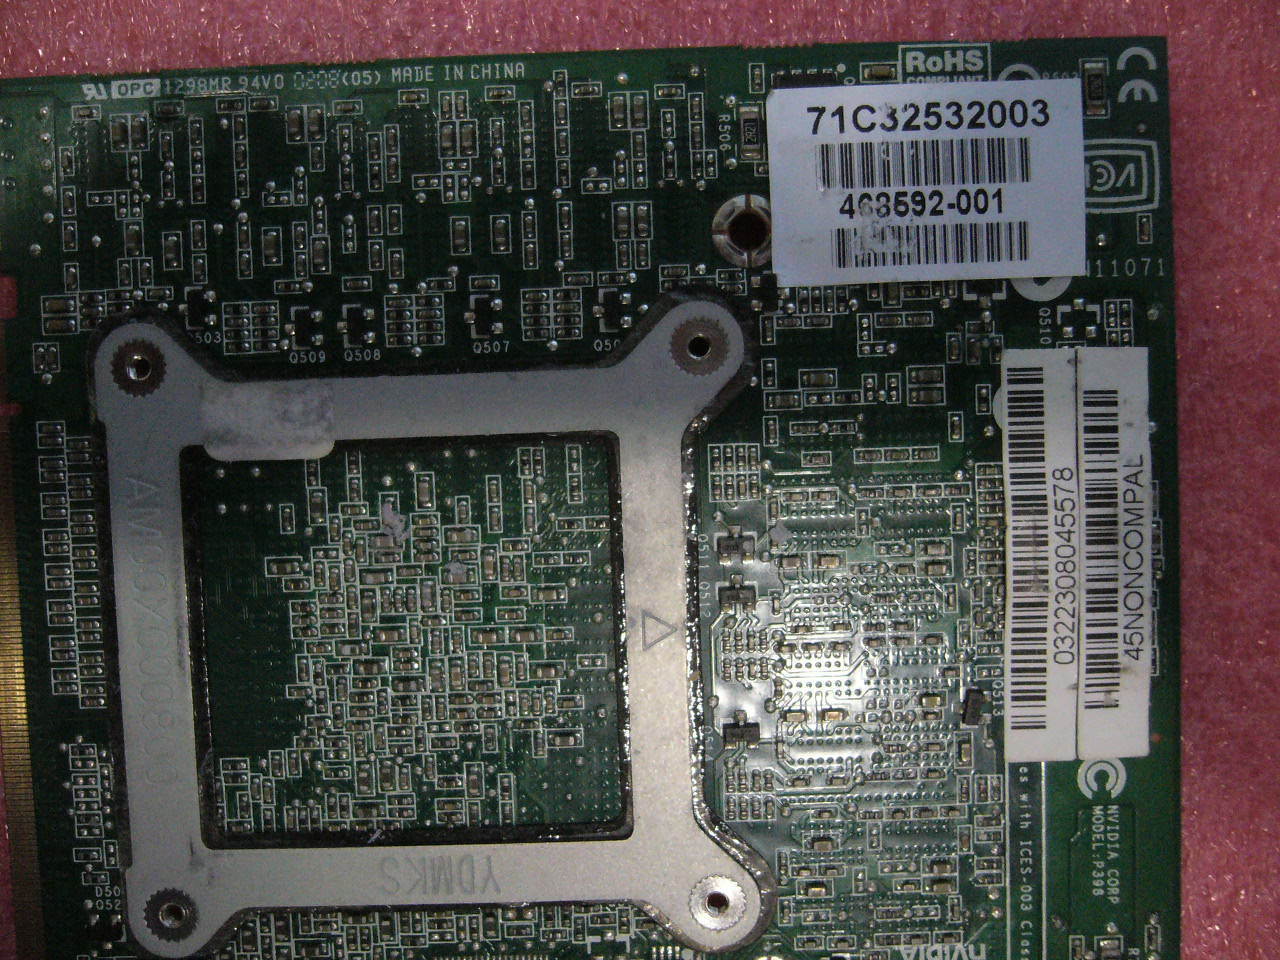 QTY 1x Nvidia Quadro FX3600M G92-975-A2 512MB Mem MXM Video Card HP - Click Image to Close